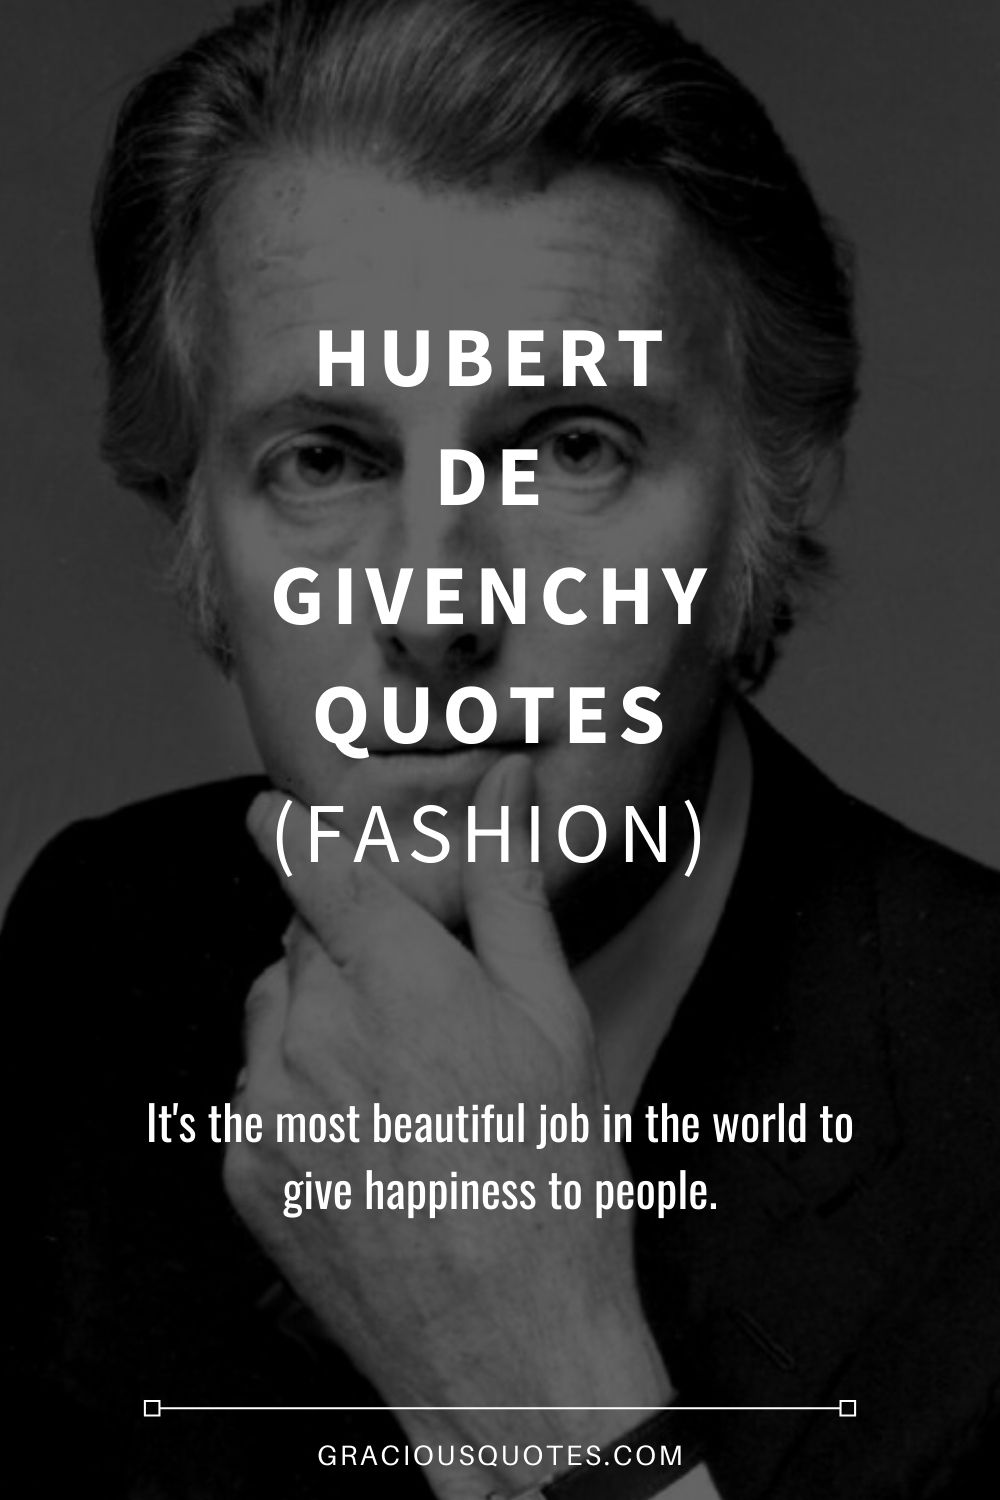 Hubert de Givenchy Quotes (FASHION) - Gracious Quotes